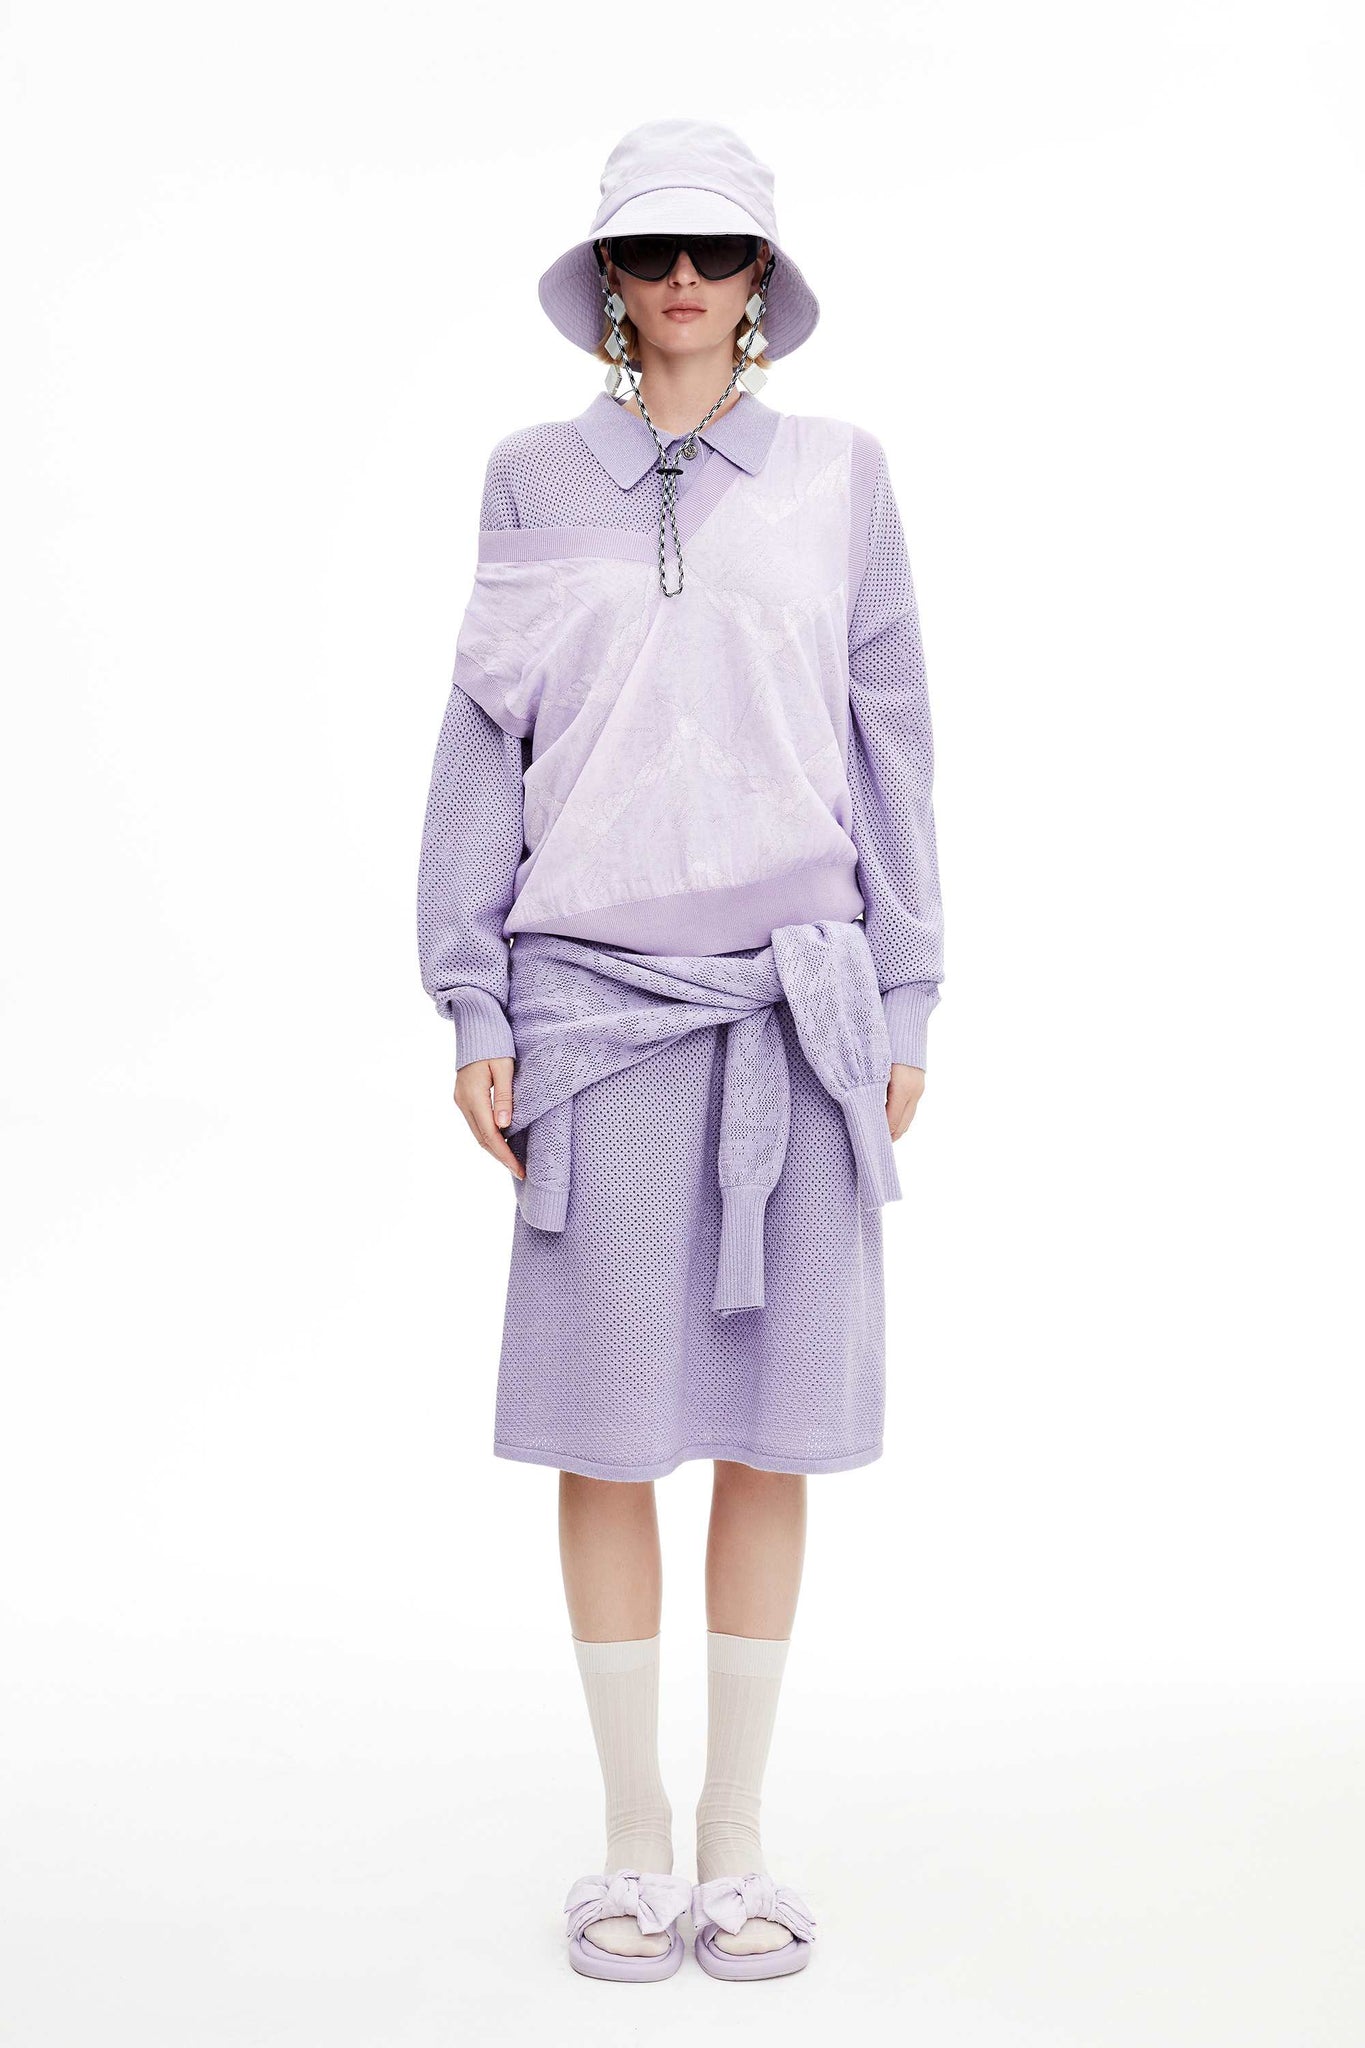 Lilac Open Knit Polo Dress